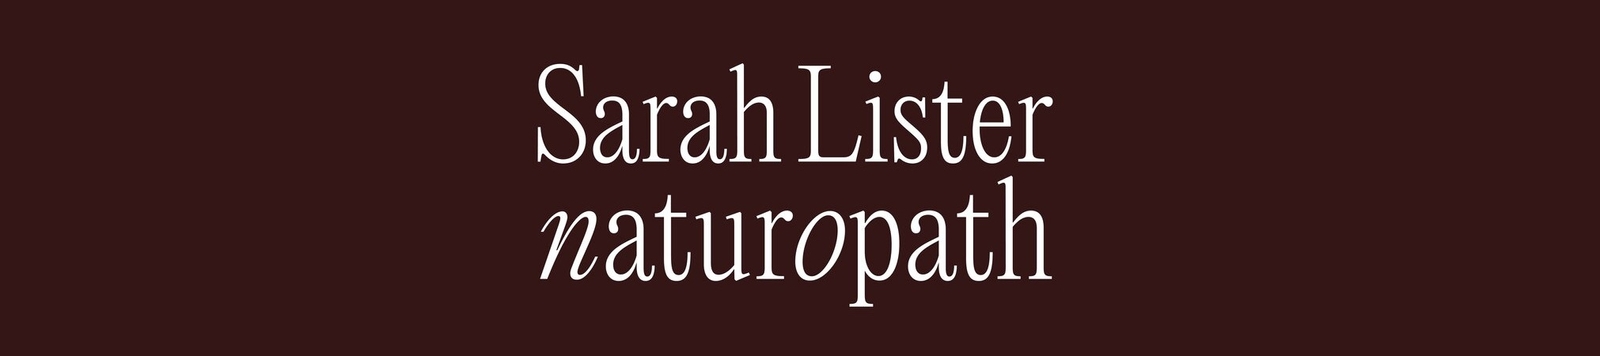 Sarah Lister Naturopath